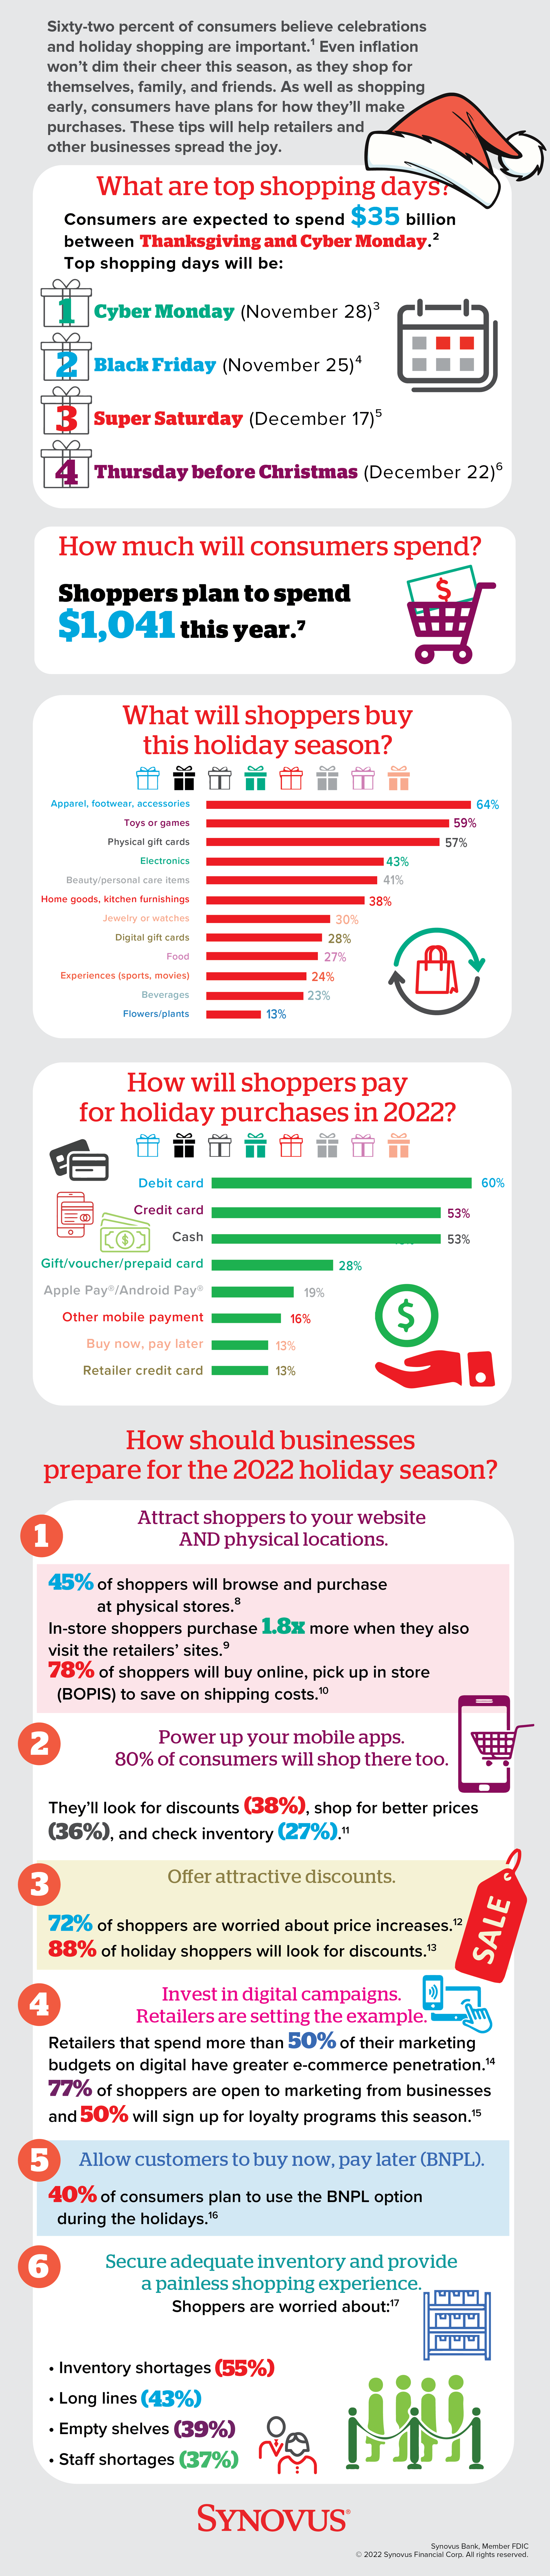 Infographic describing holiday shopping. A full description is available through a link beneath the image.